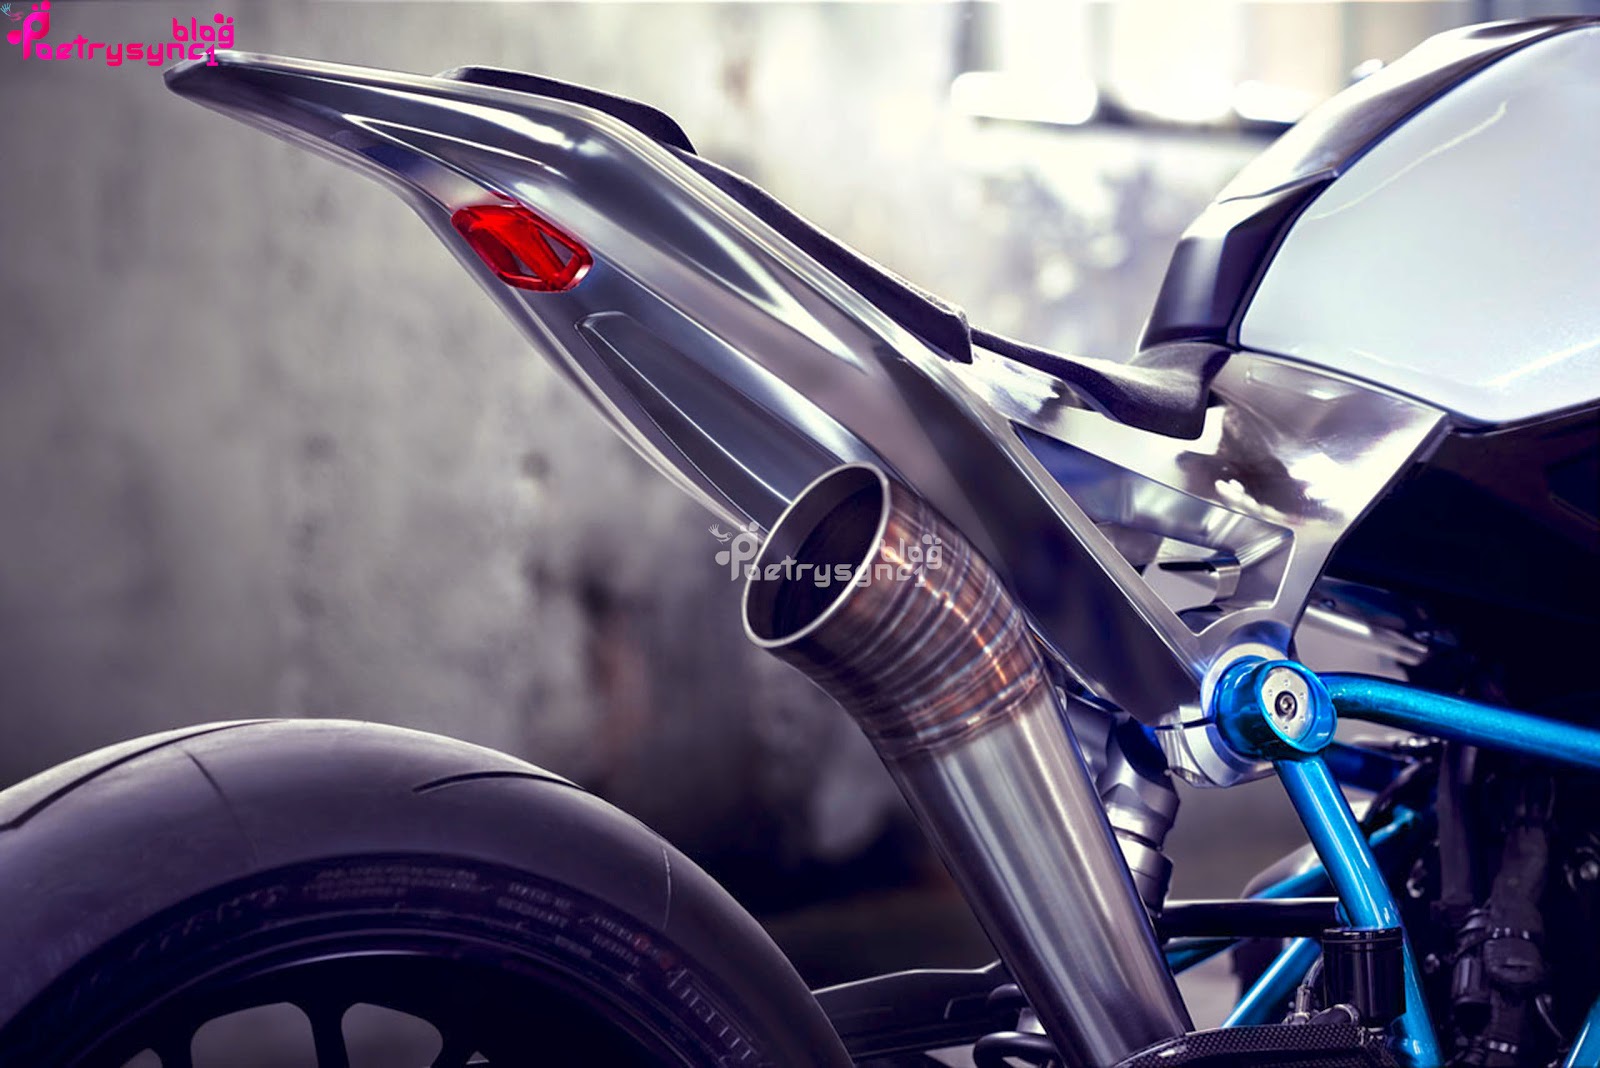 Latest-2015-Roadster-Bike-New-Model-HD-By-Poetrysync1.blog